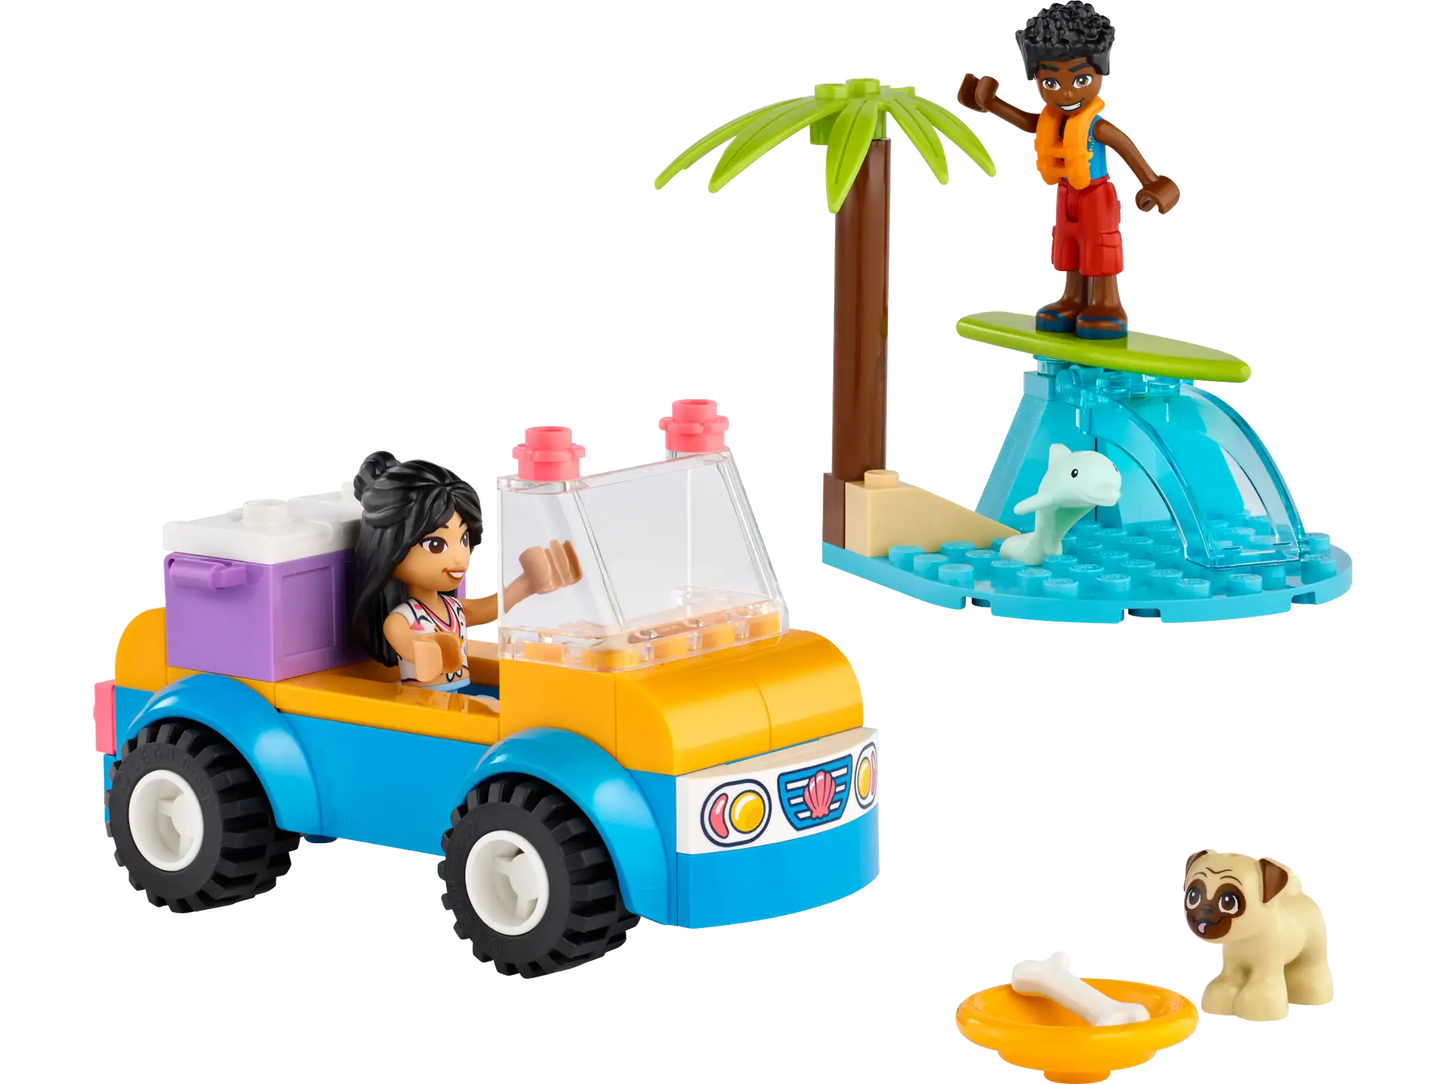 Beach Buggy Lego Set